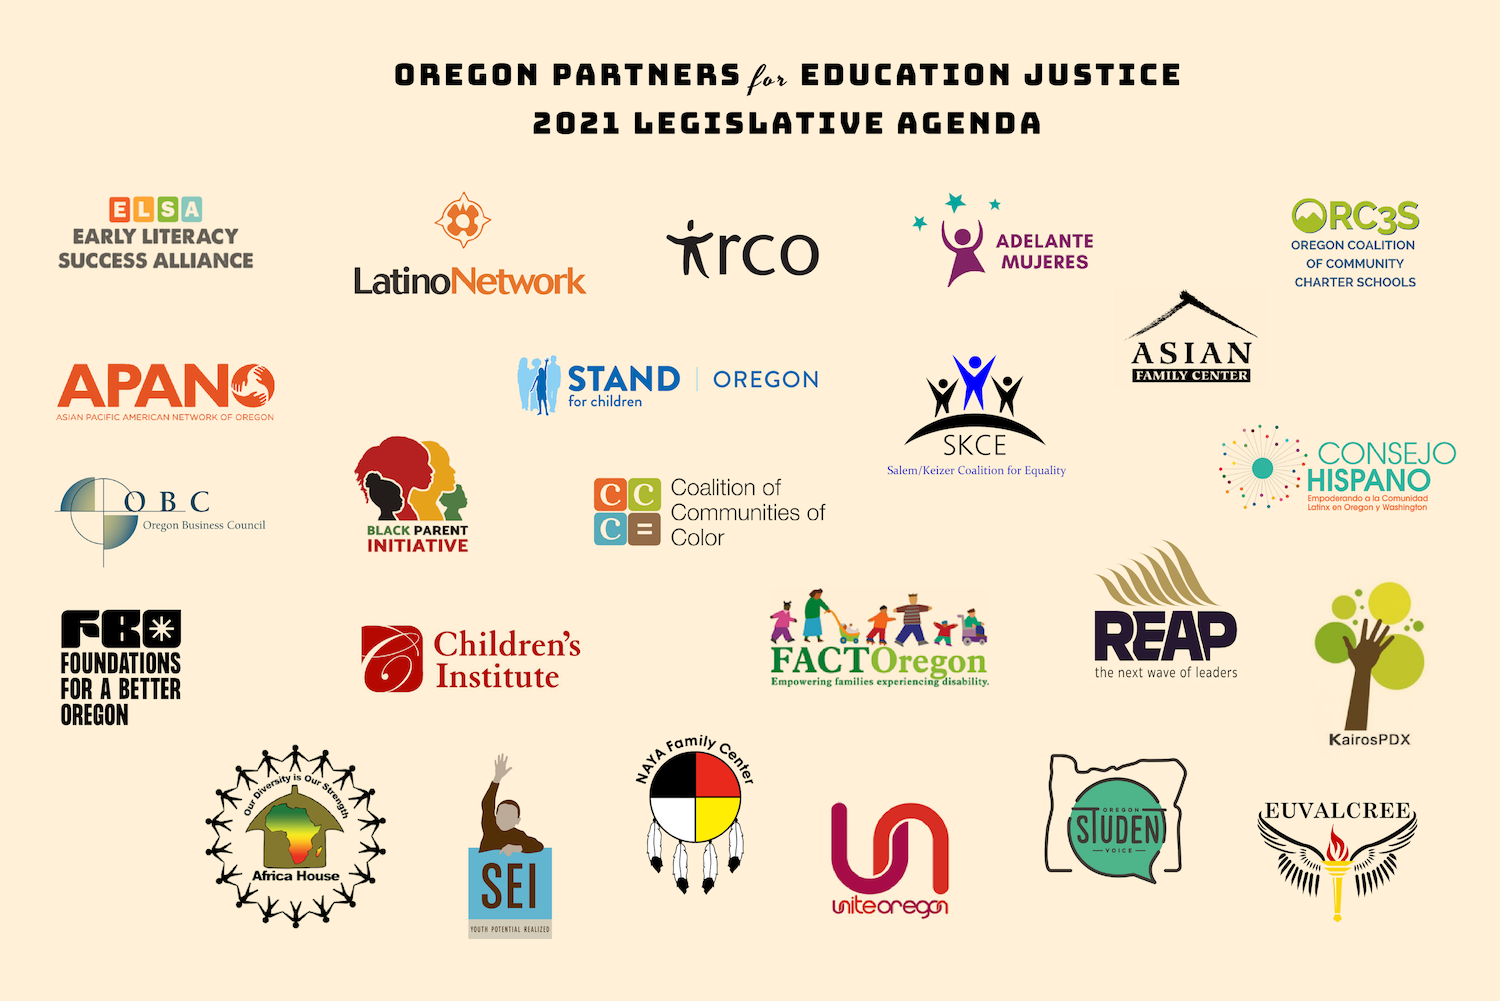 Over 20 organizations endorsed the Oregon Partners for Education Justice 2021 Legislative Agenda